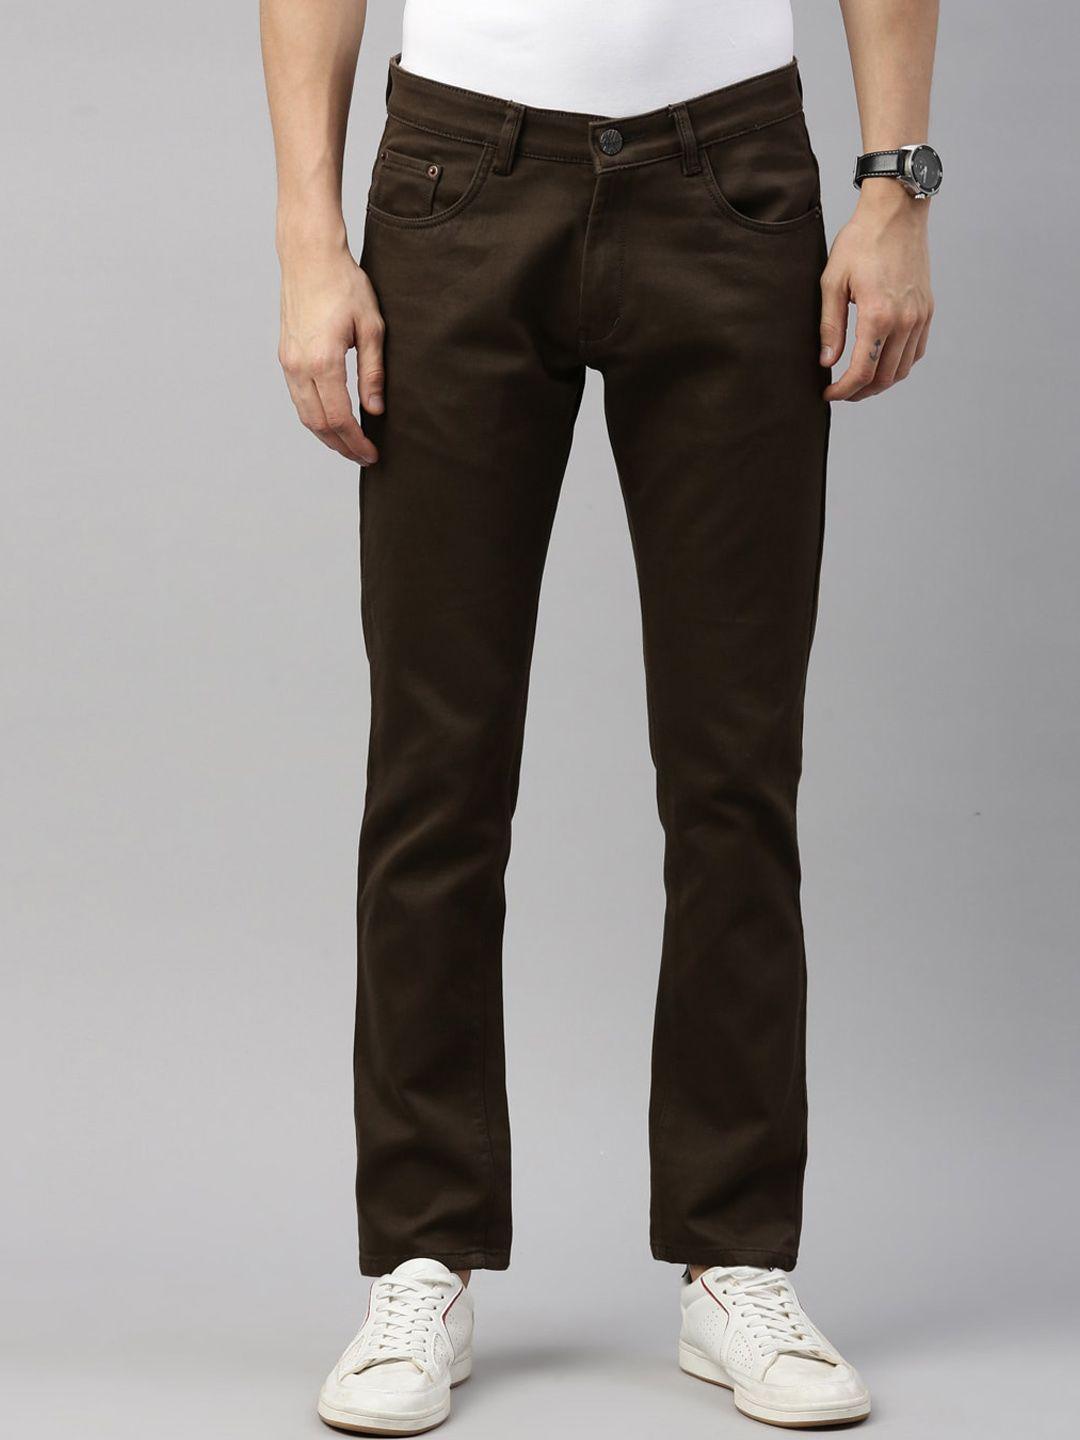 cinocci-men-brown-slim-fit-stretchable-jeans